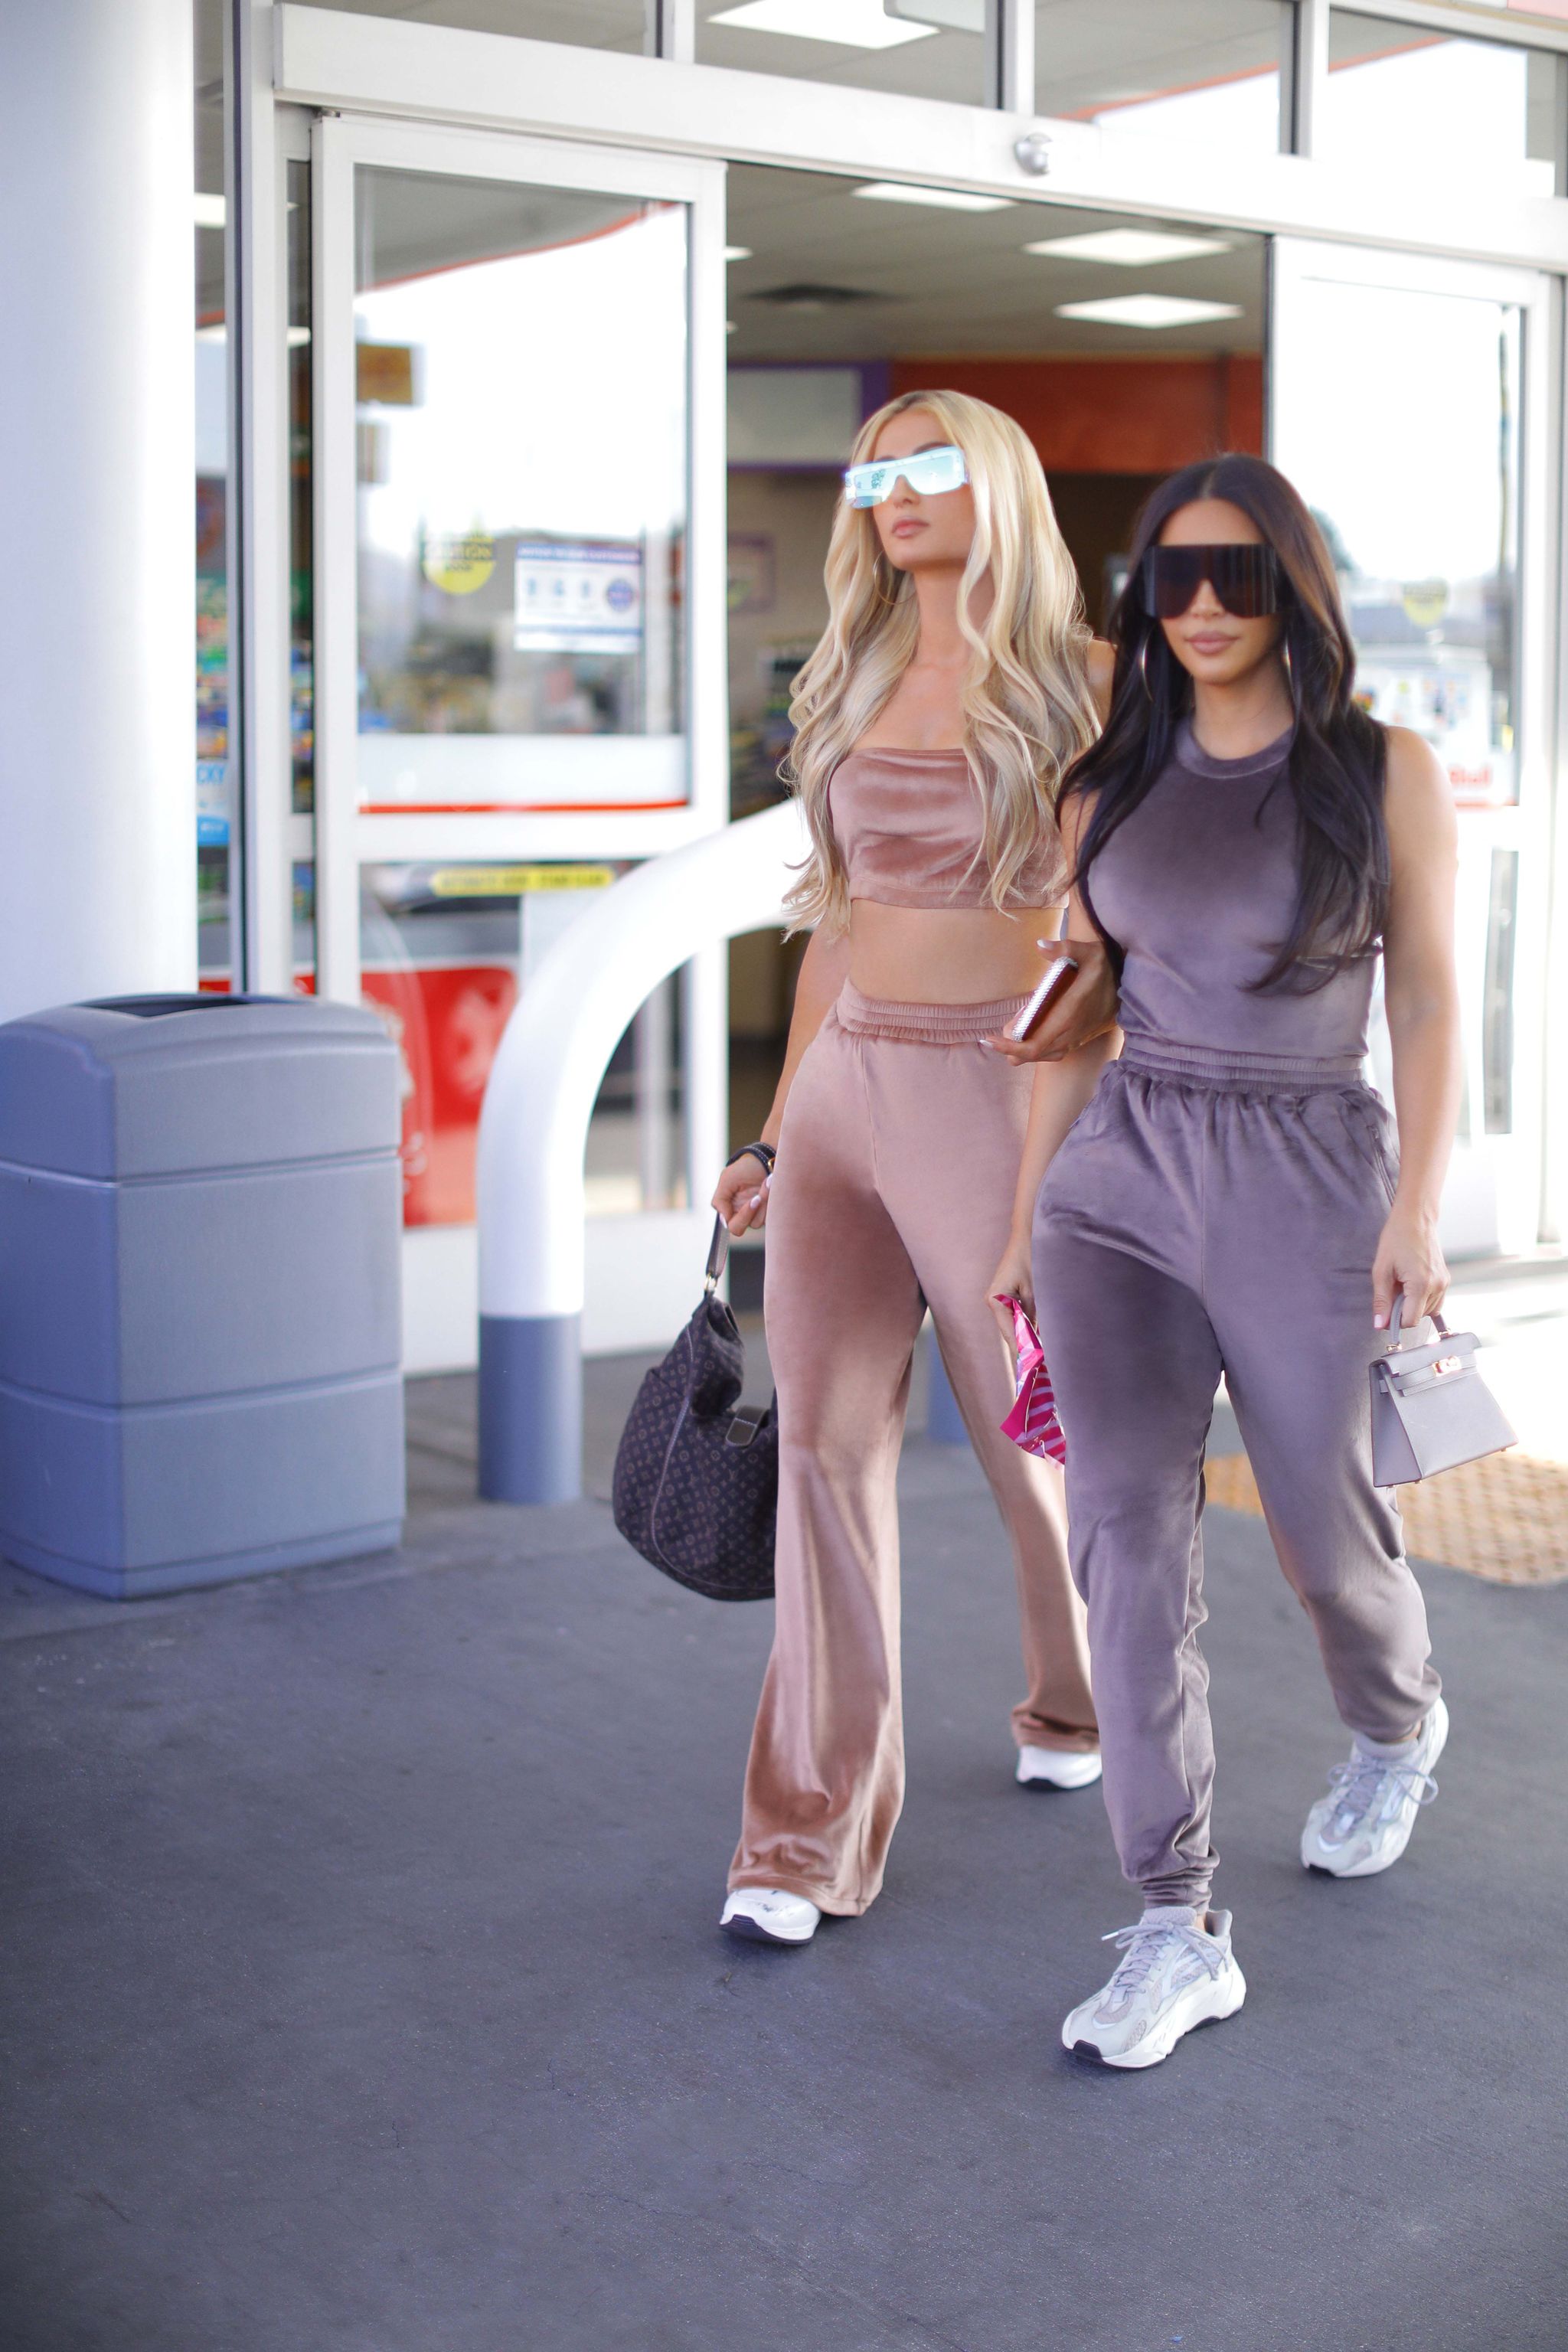 Kim Kardashian West and Paris Hilton are bringing back the velour